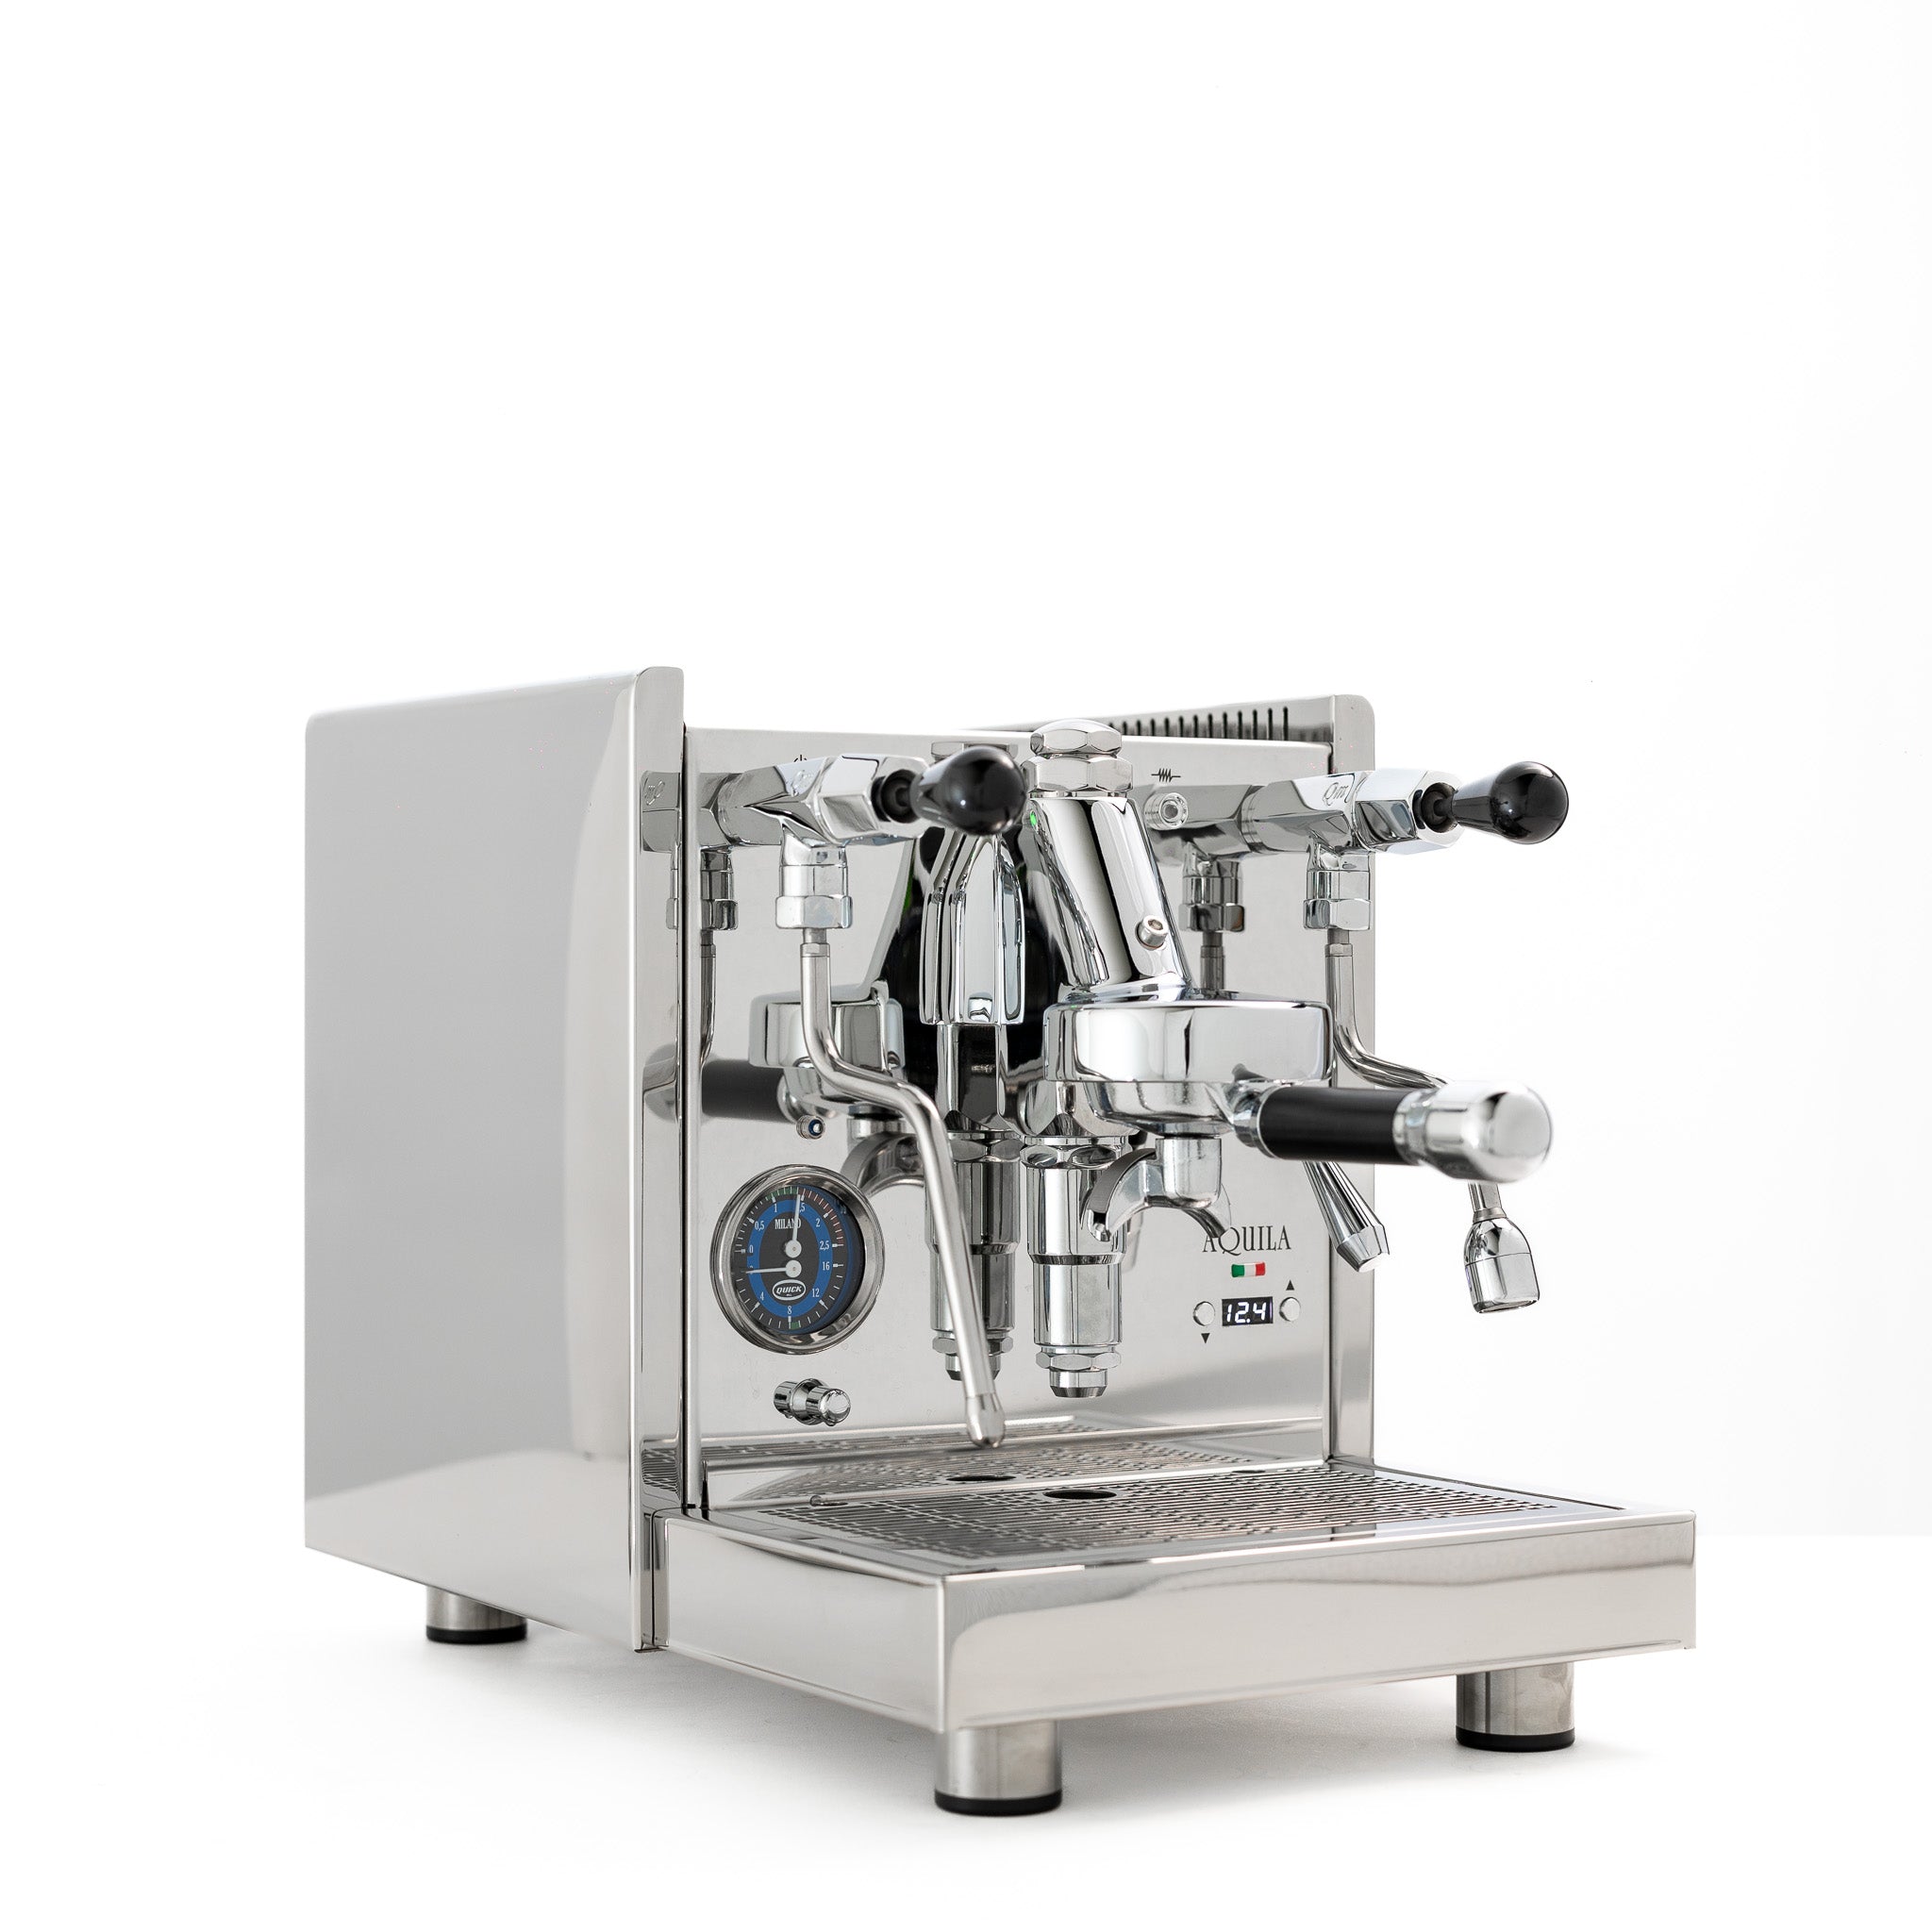 Quick Mill Aquila Profi Stainless Steel Coffee Machine